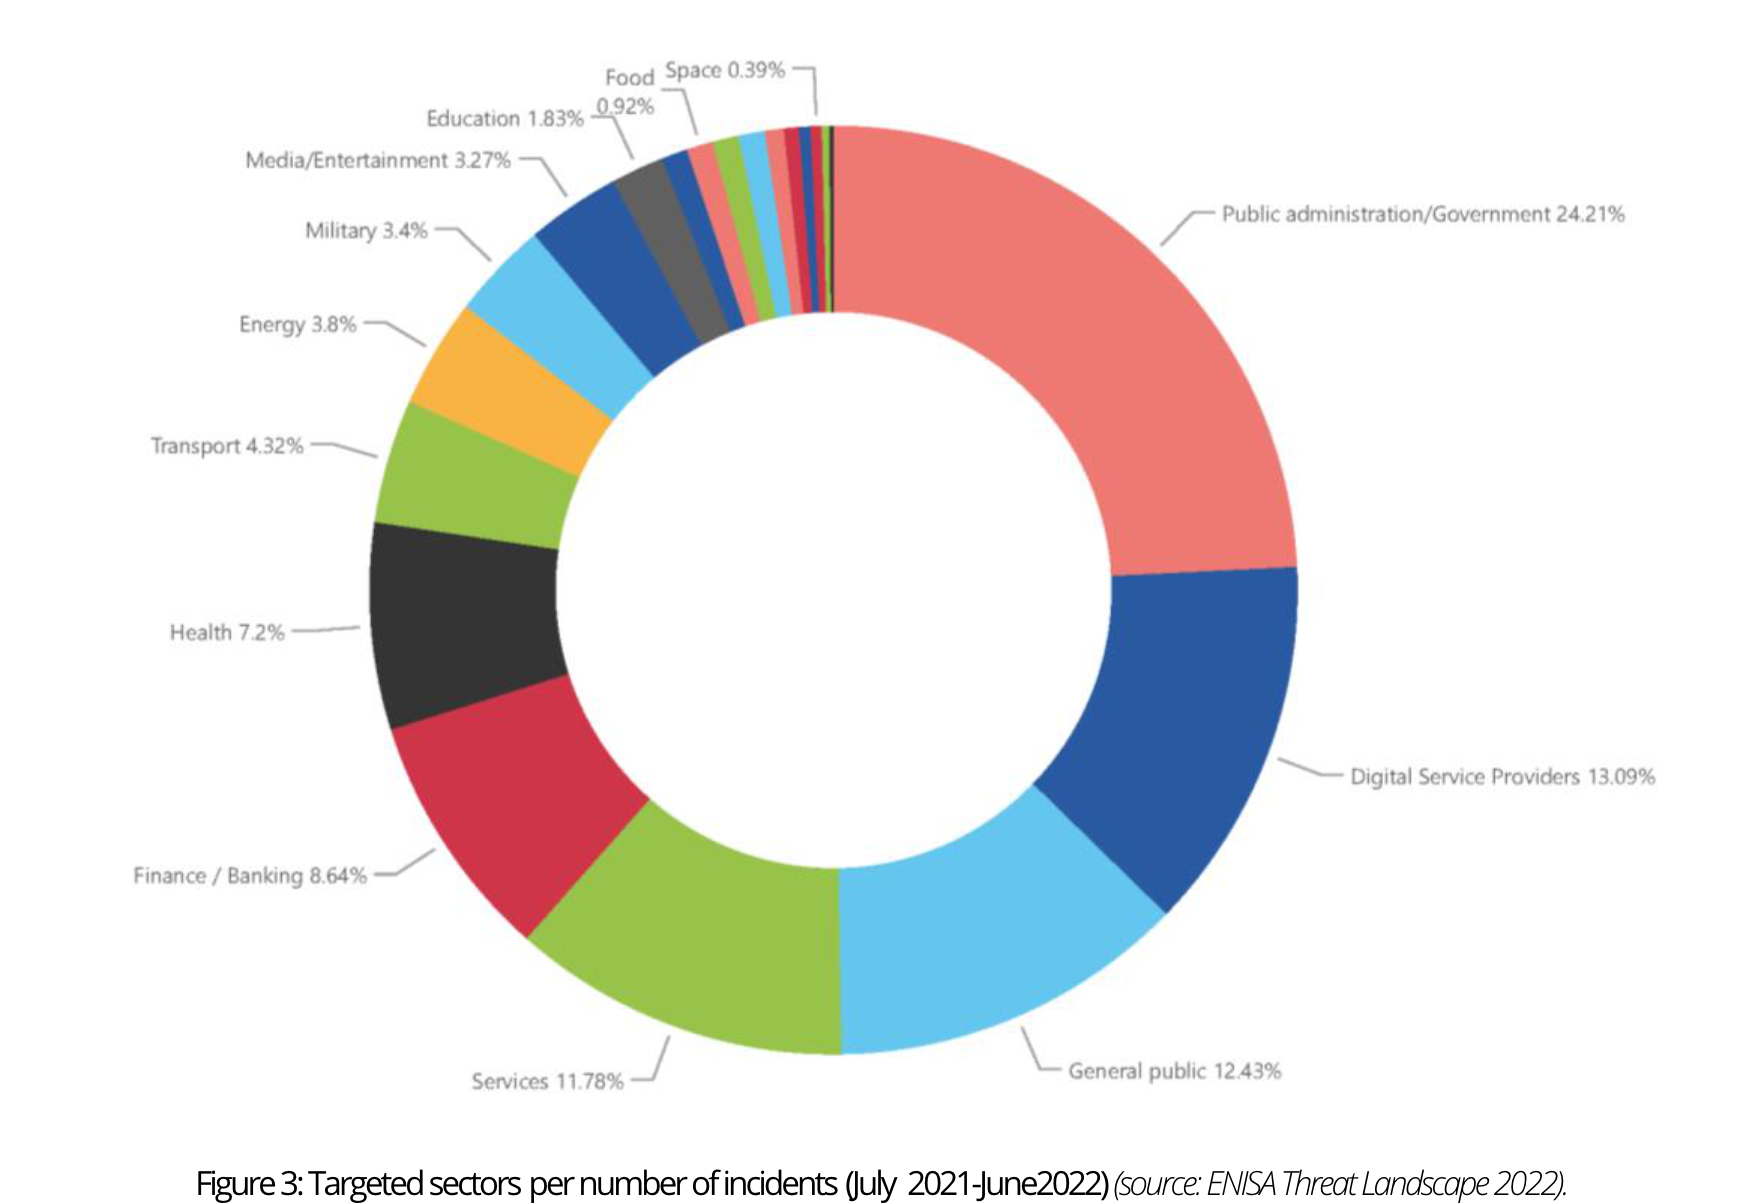 Figure 4: Targeted sectors per number of incidents (July 2021-June 2022)